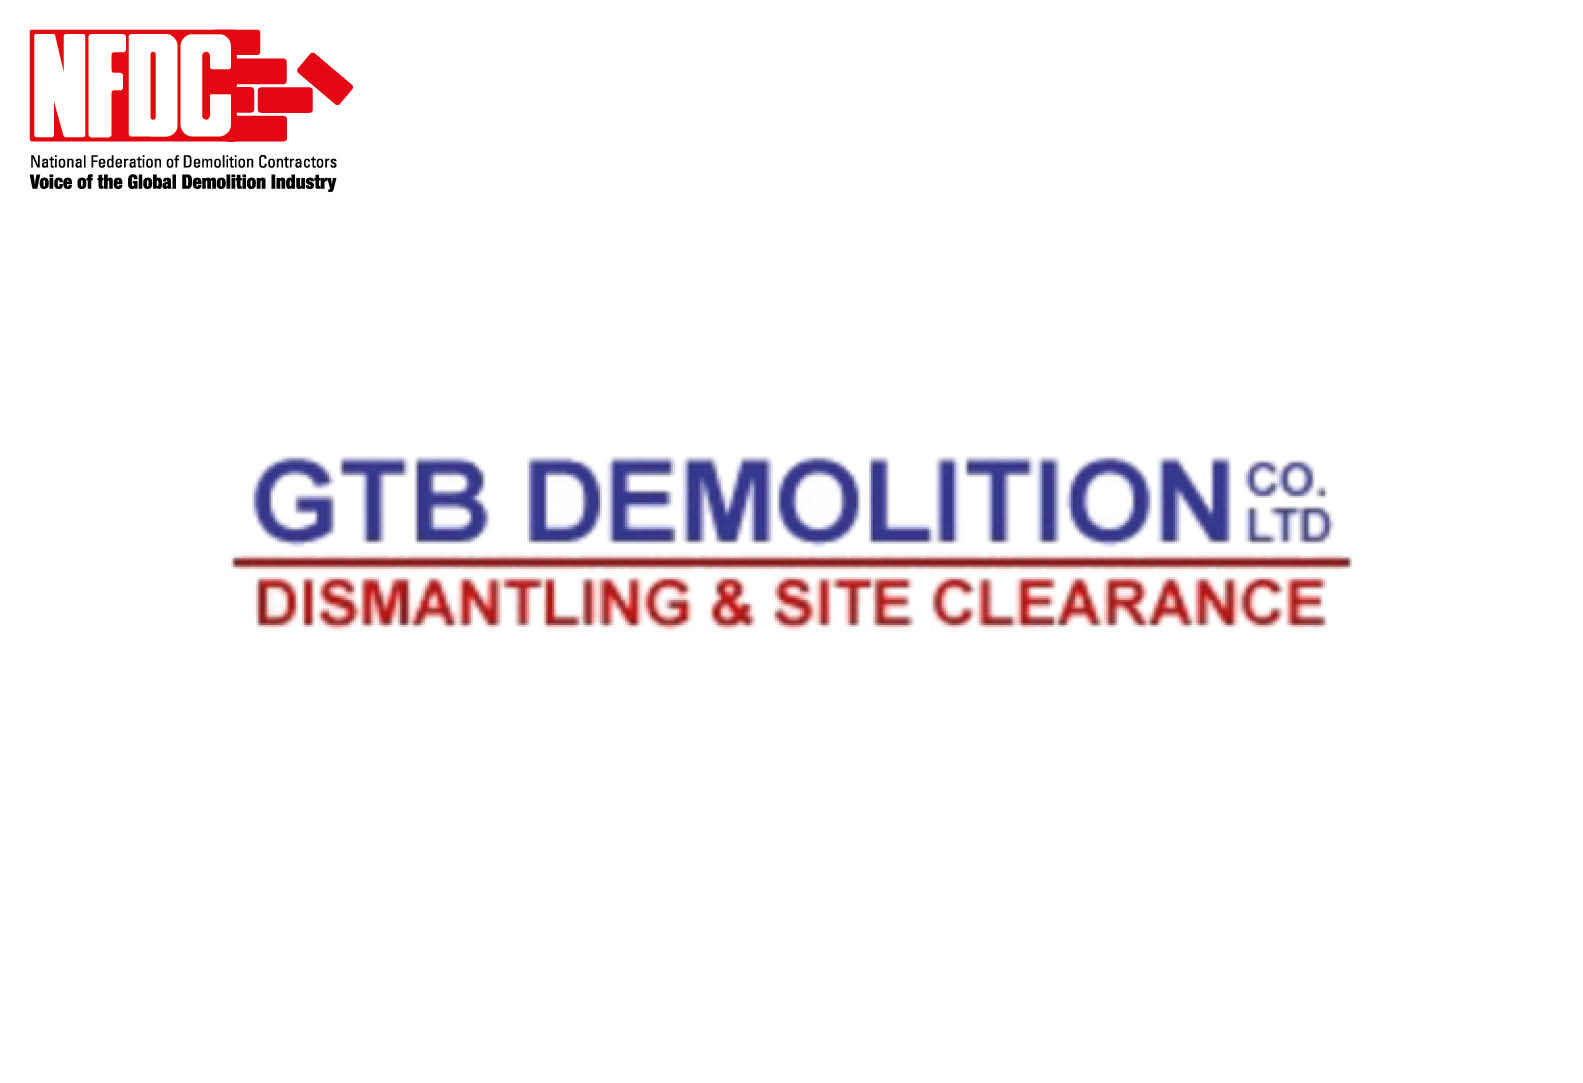 G T B Demolition Co Ltd